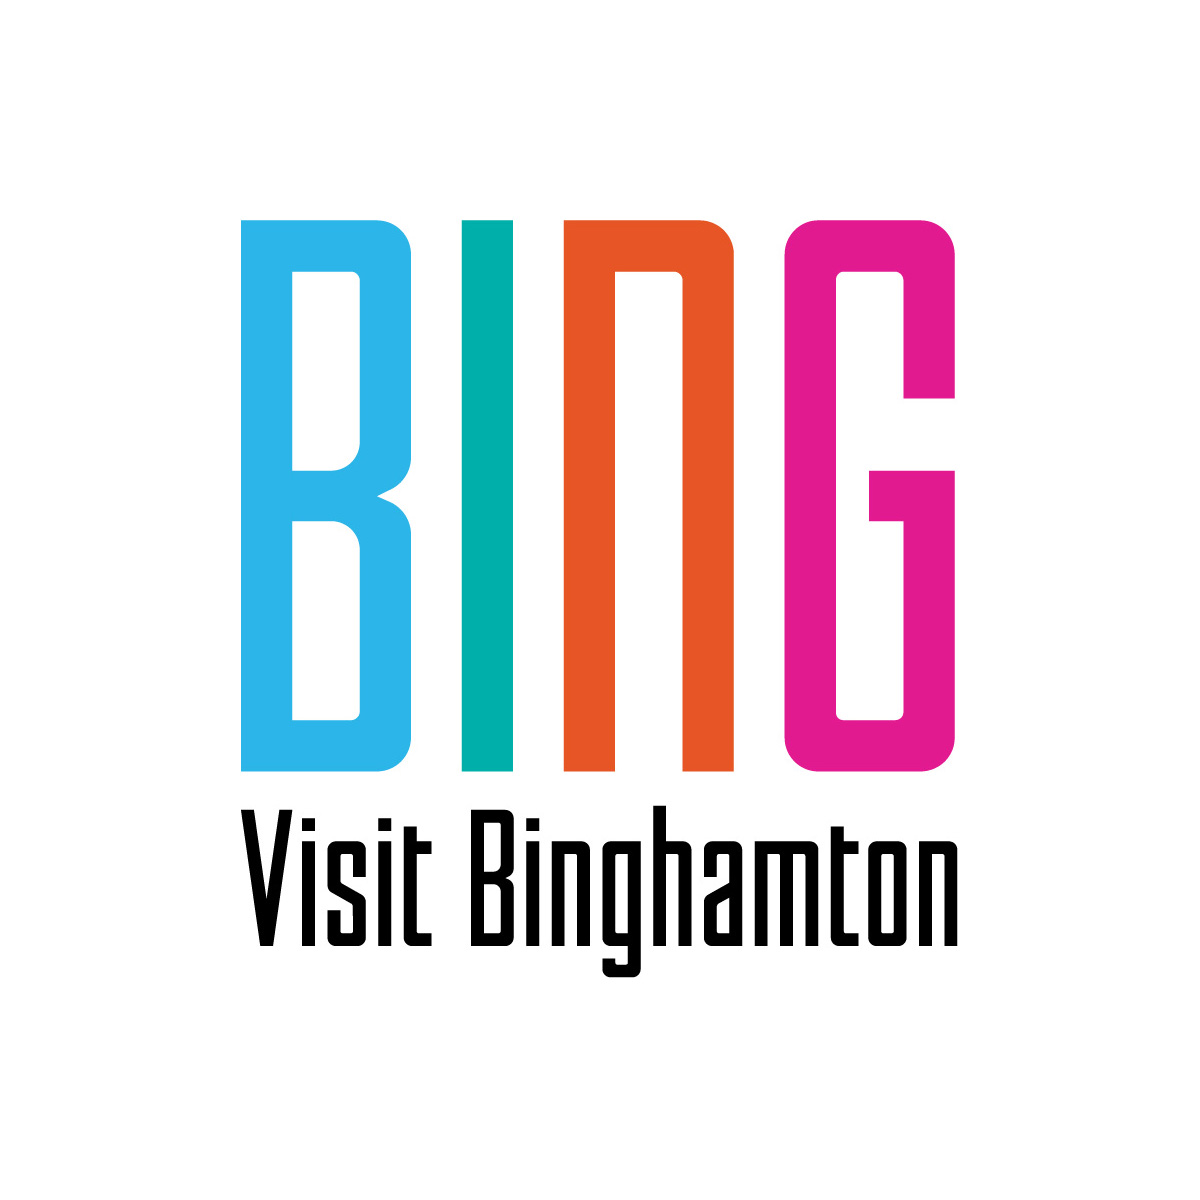 Visit Binghamton